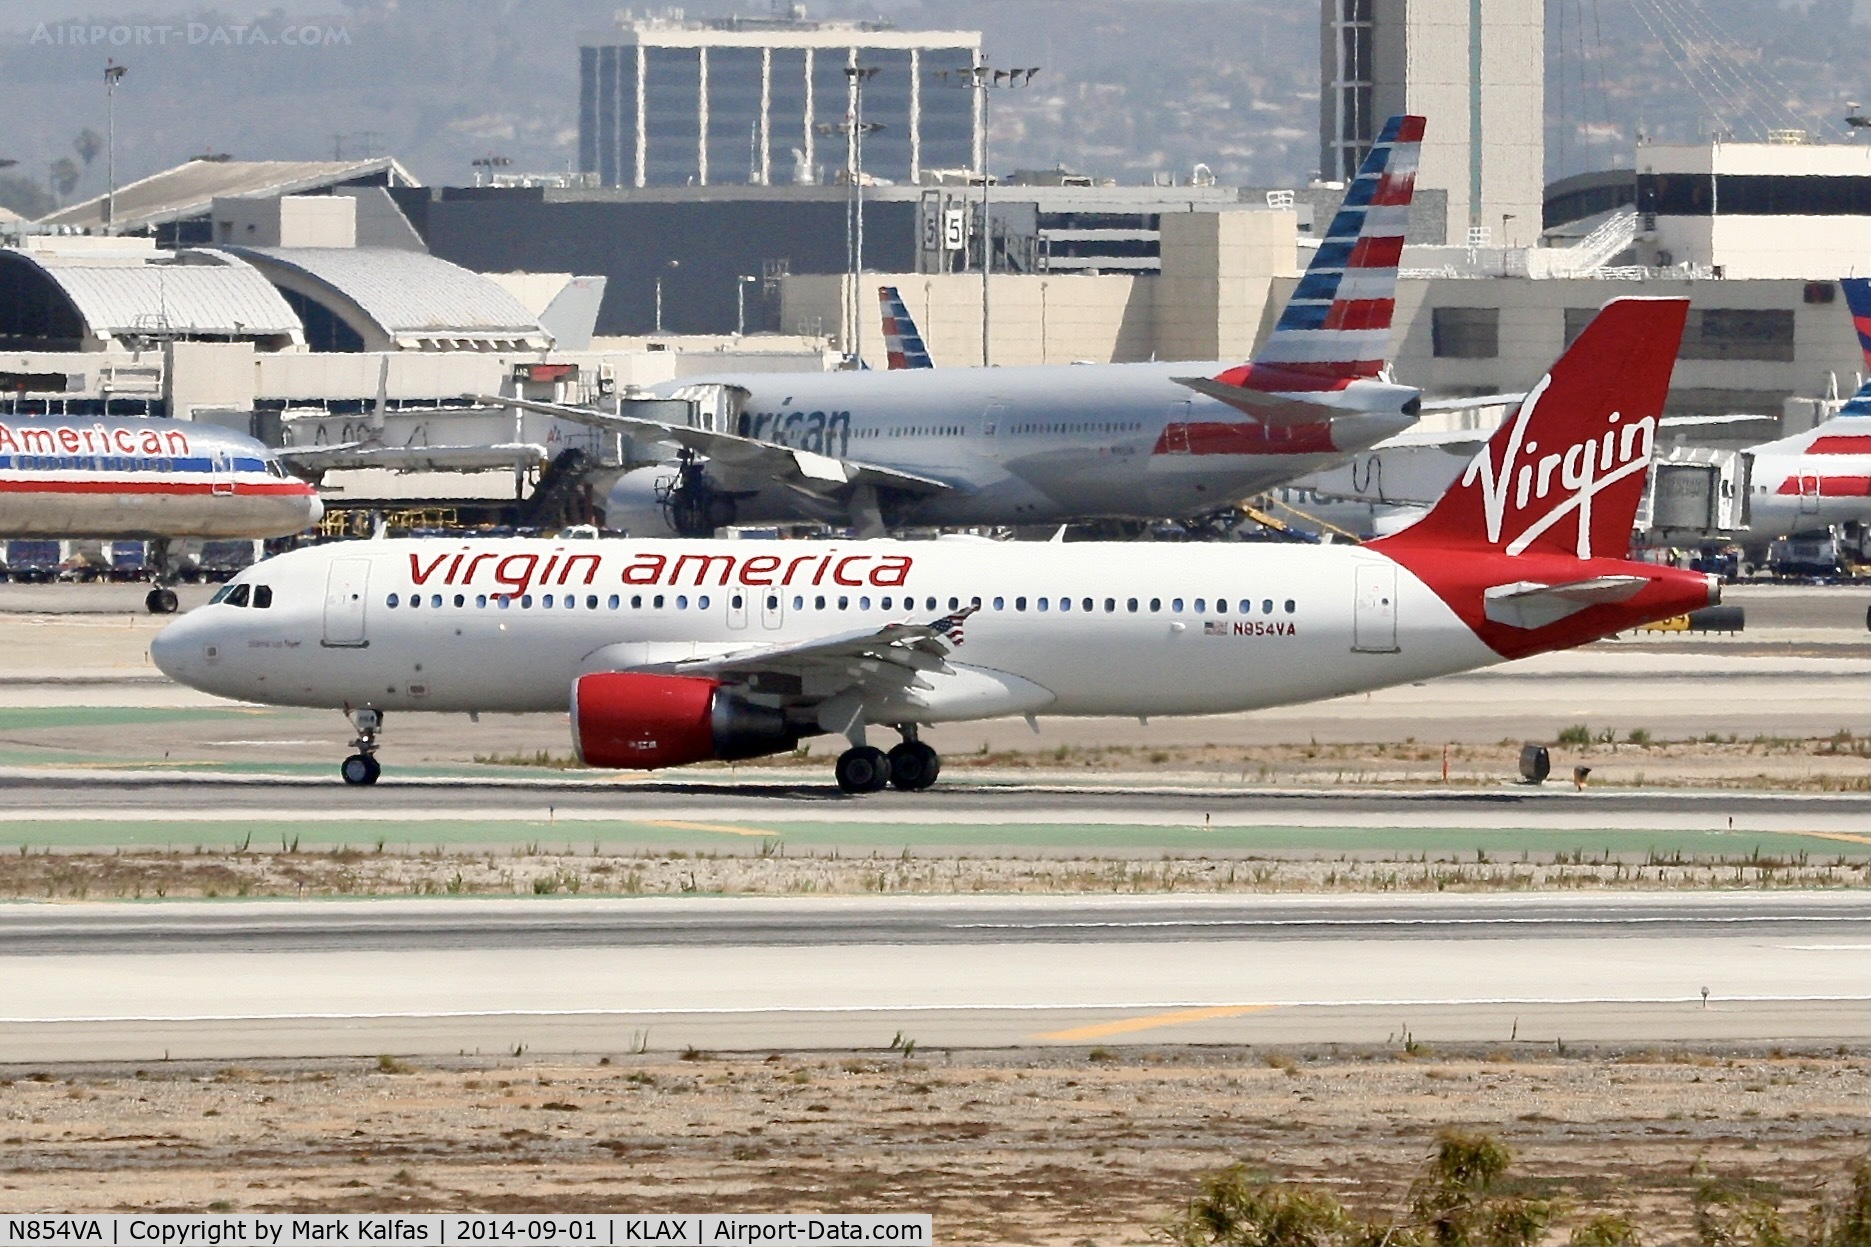 N854VA, 2012 Airbus A320-214 C/N 5058, Virgin America Airbus A320-214, N854VA at LAX